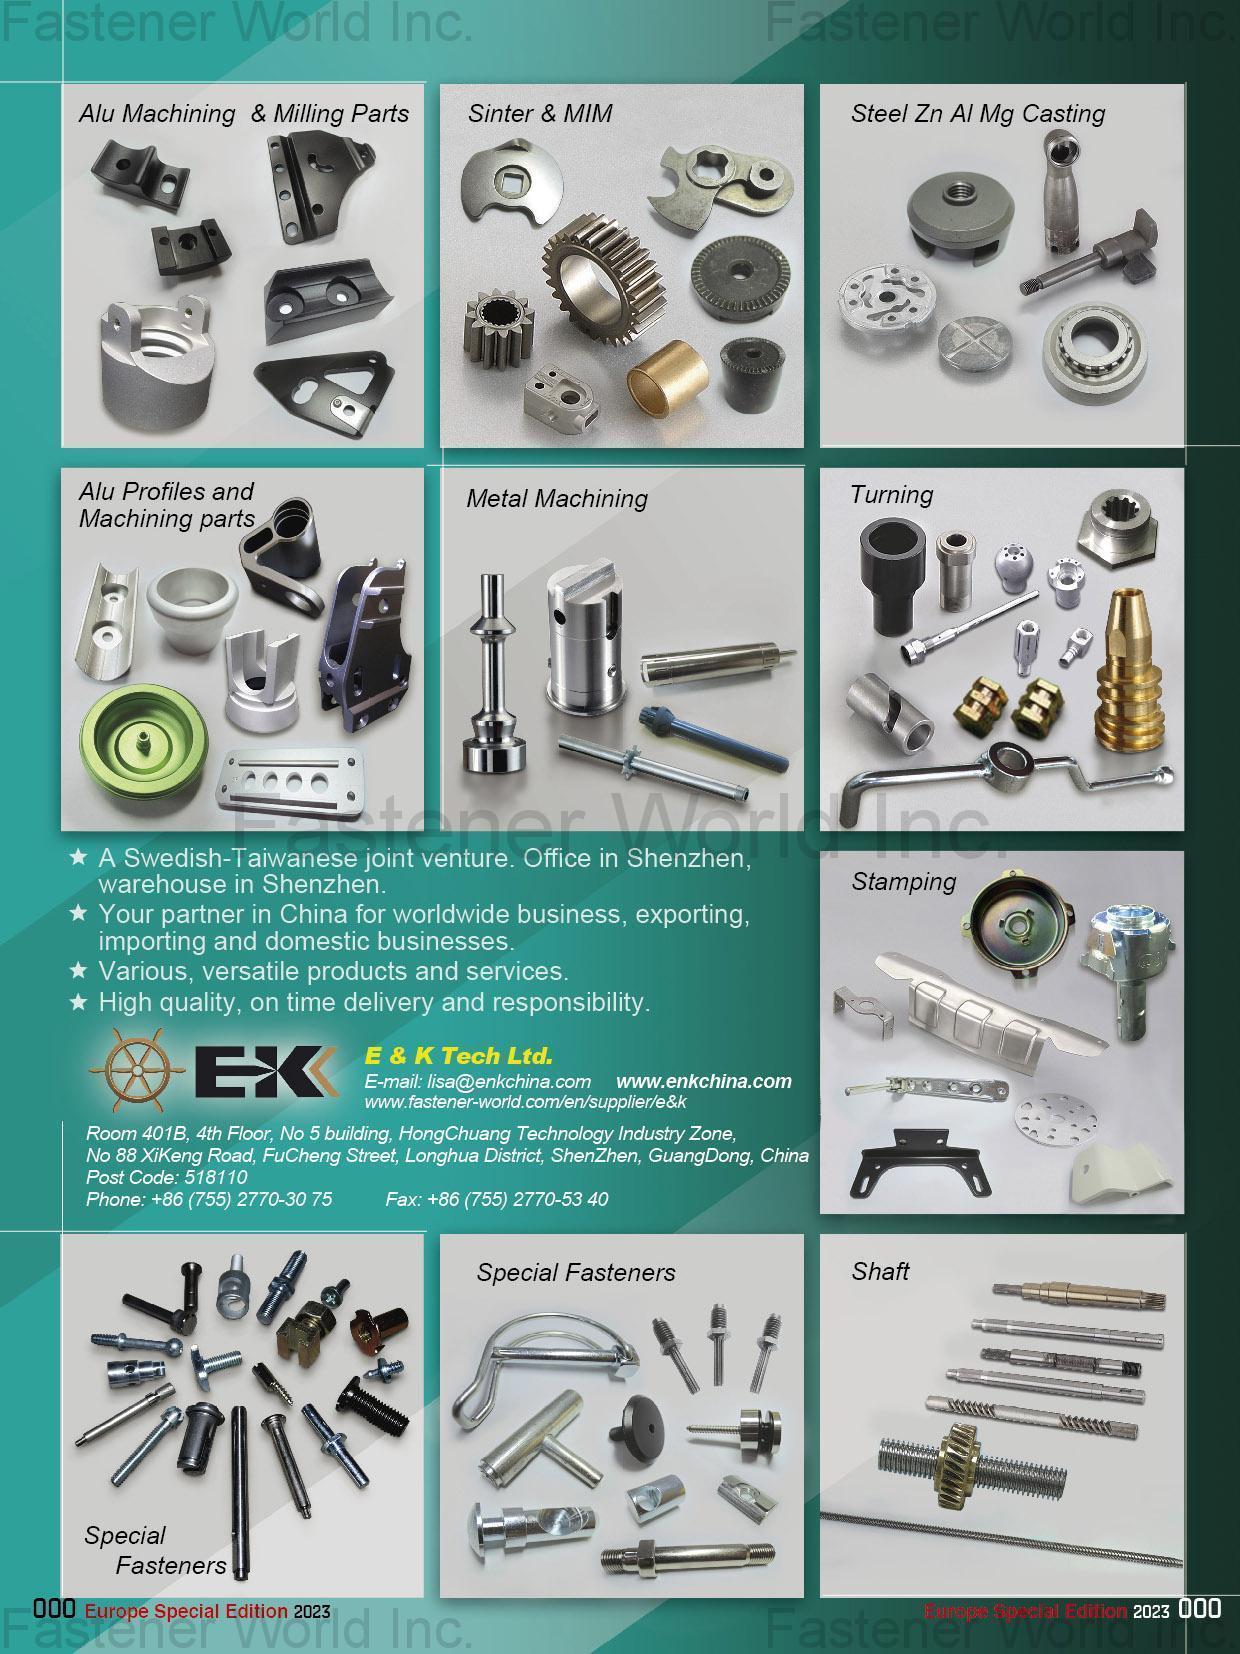 E & K TECH LTD. , Alu Machining & Milling Parts, Sinter & MIM, Steel Zn Al Mg Casting, Alu Profiles and Machining Parts, Turning, Stamping, Shaft, Special Fasteners